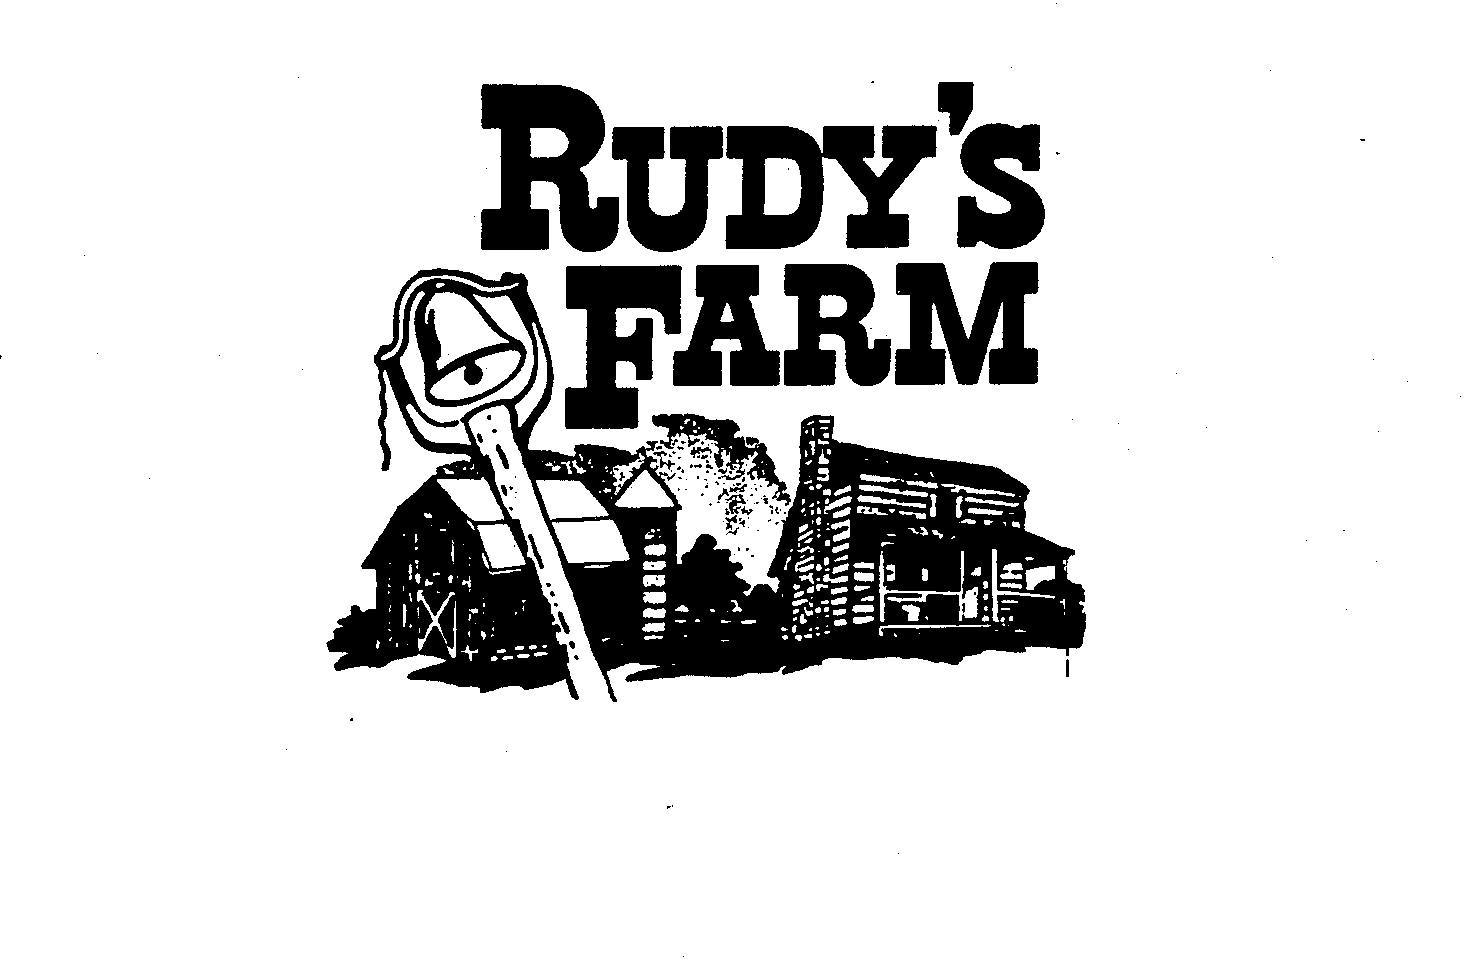  RUDY'S FARM